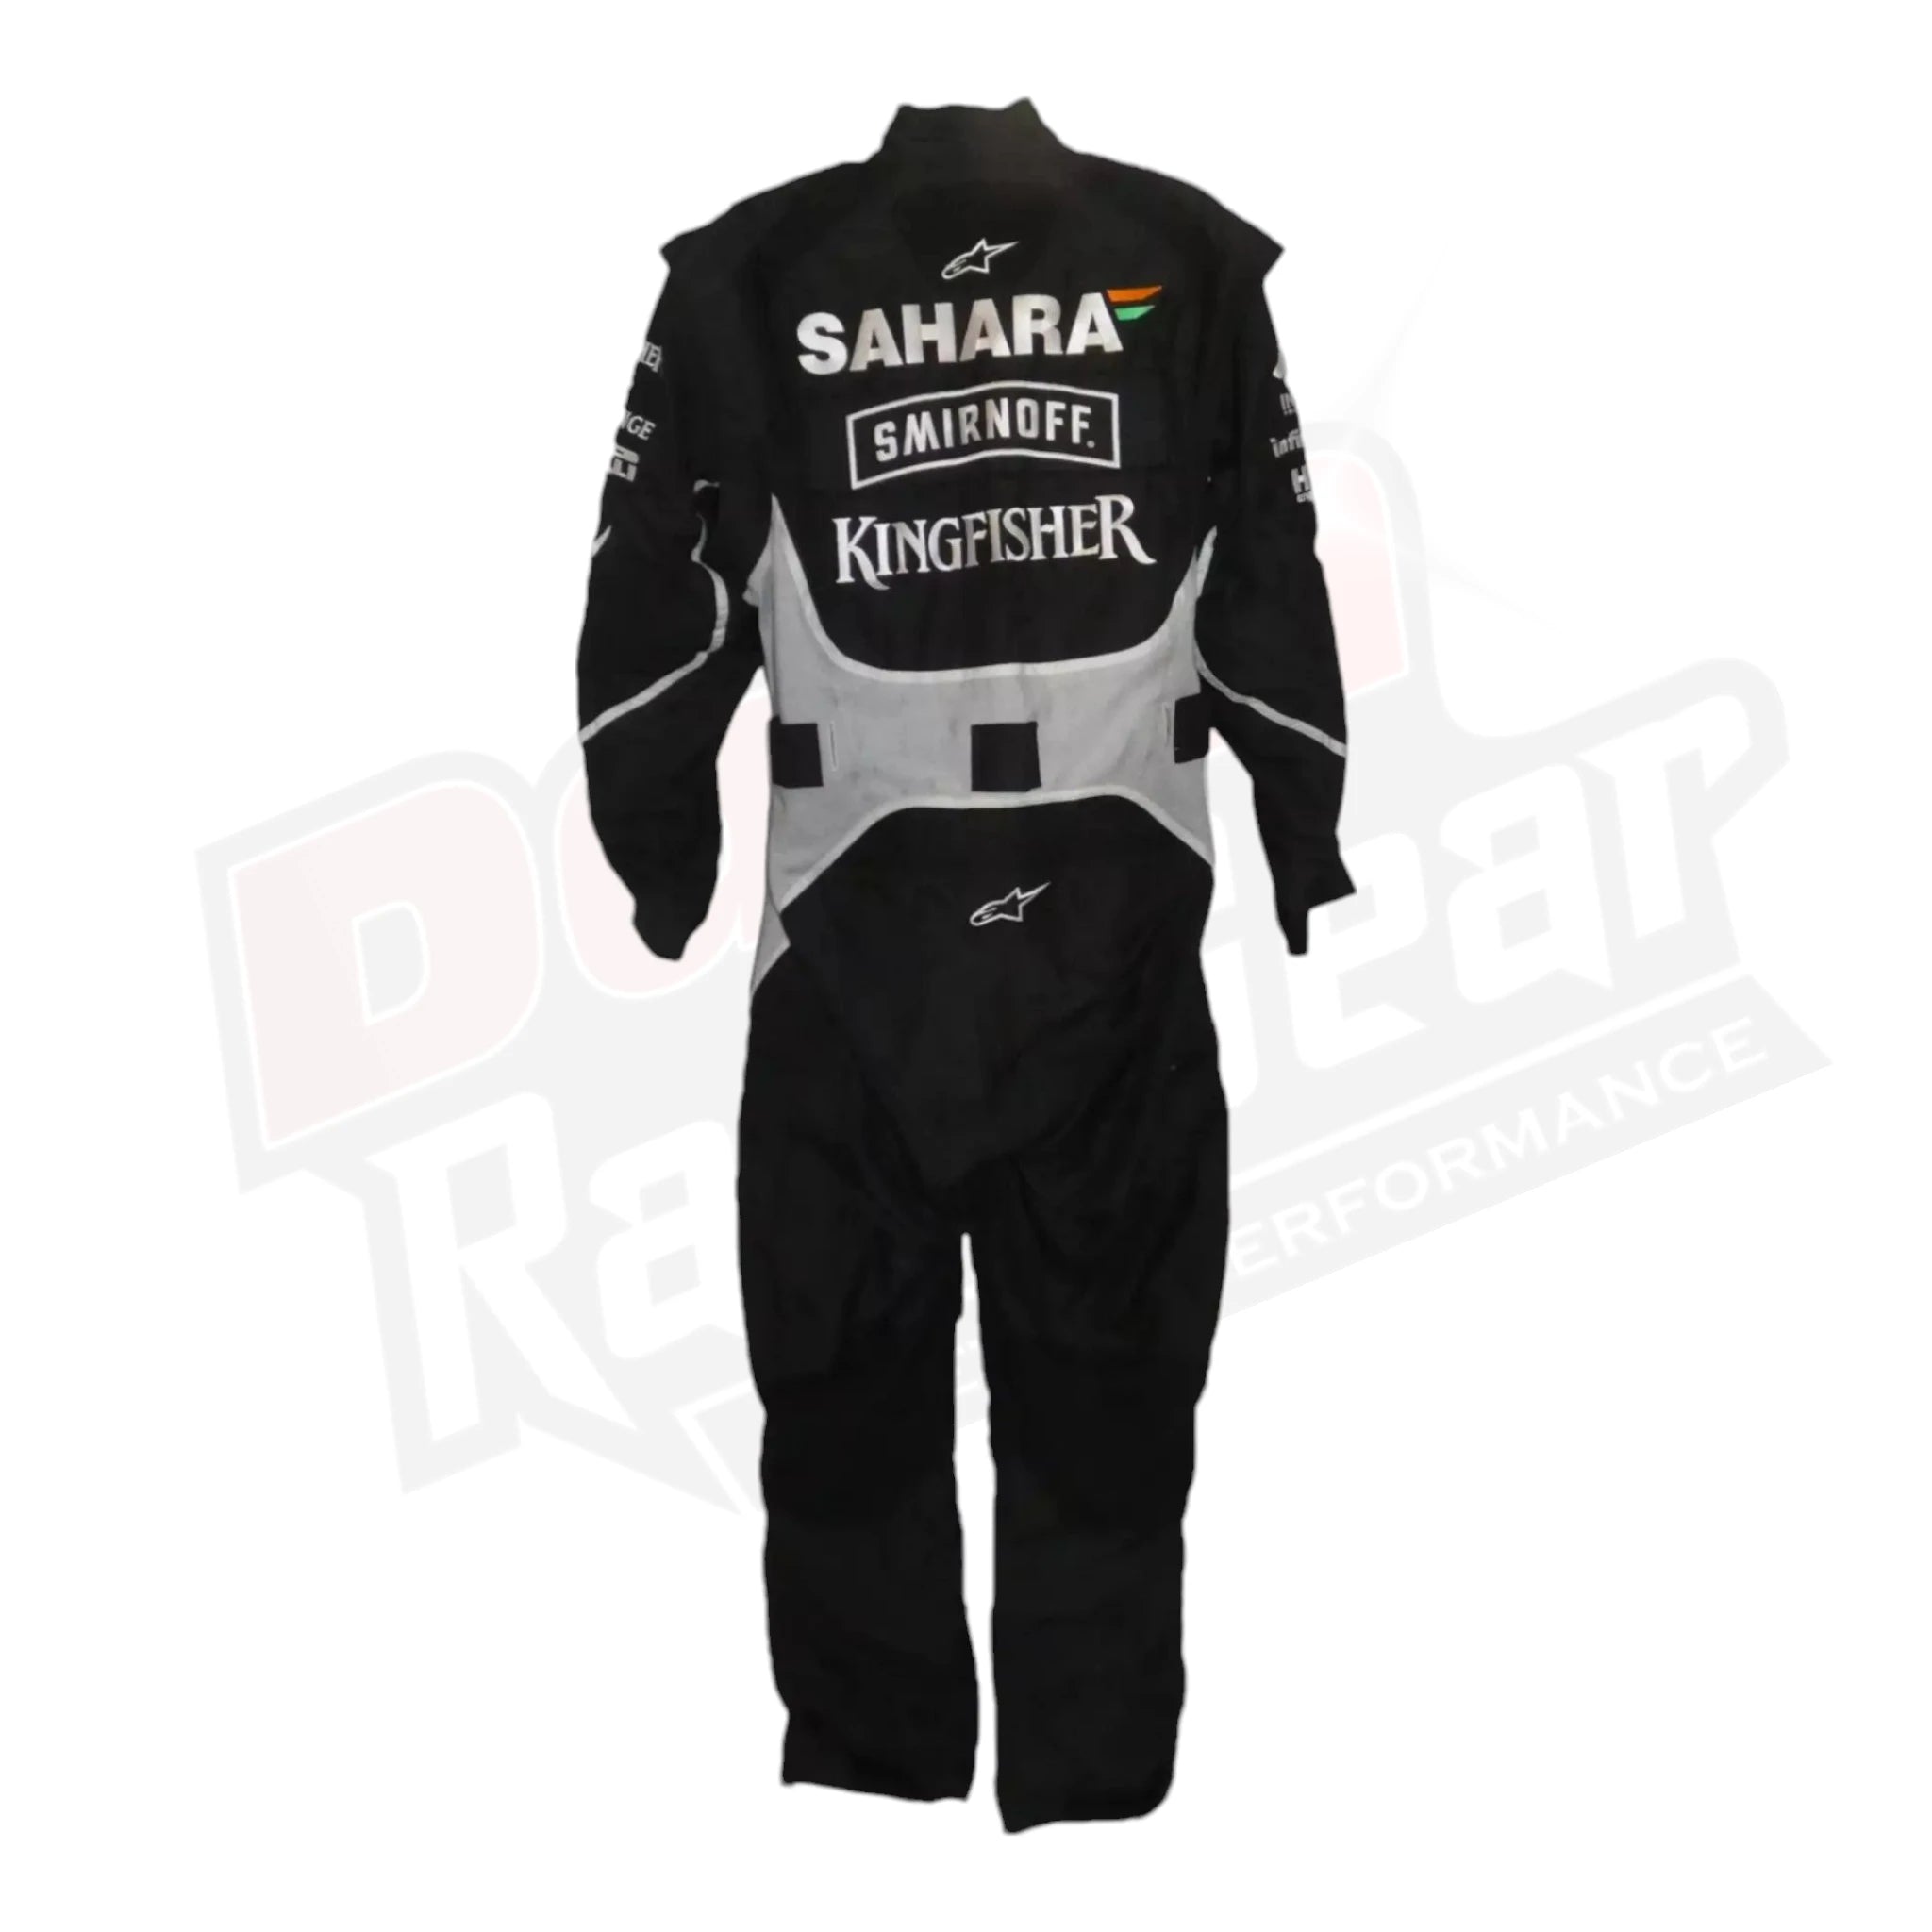 Sahara Force India 2016 pit crew suit